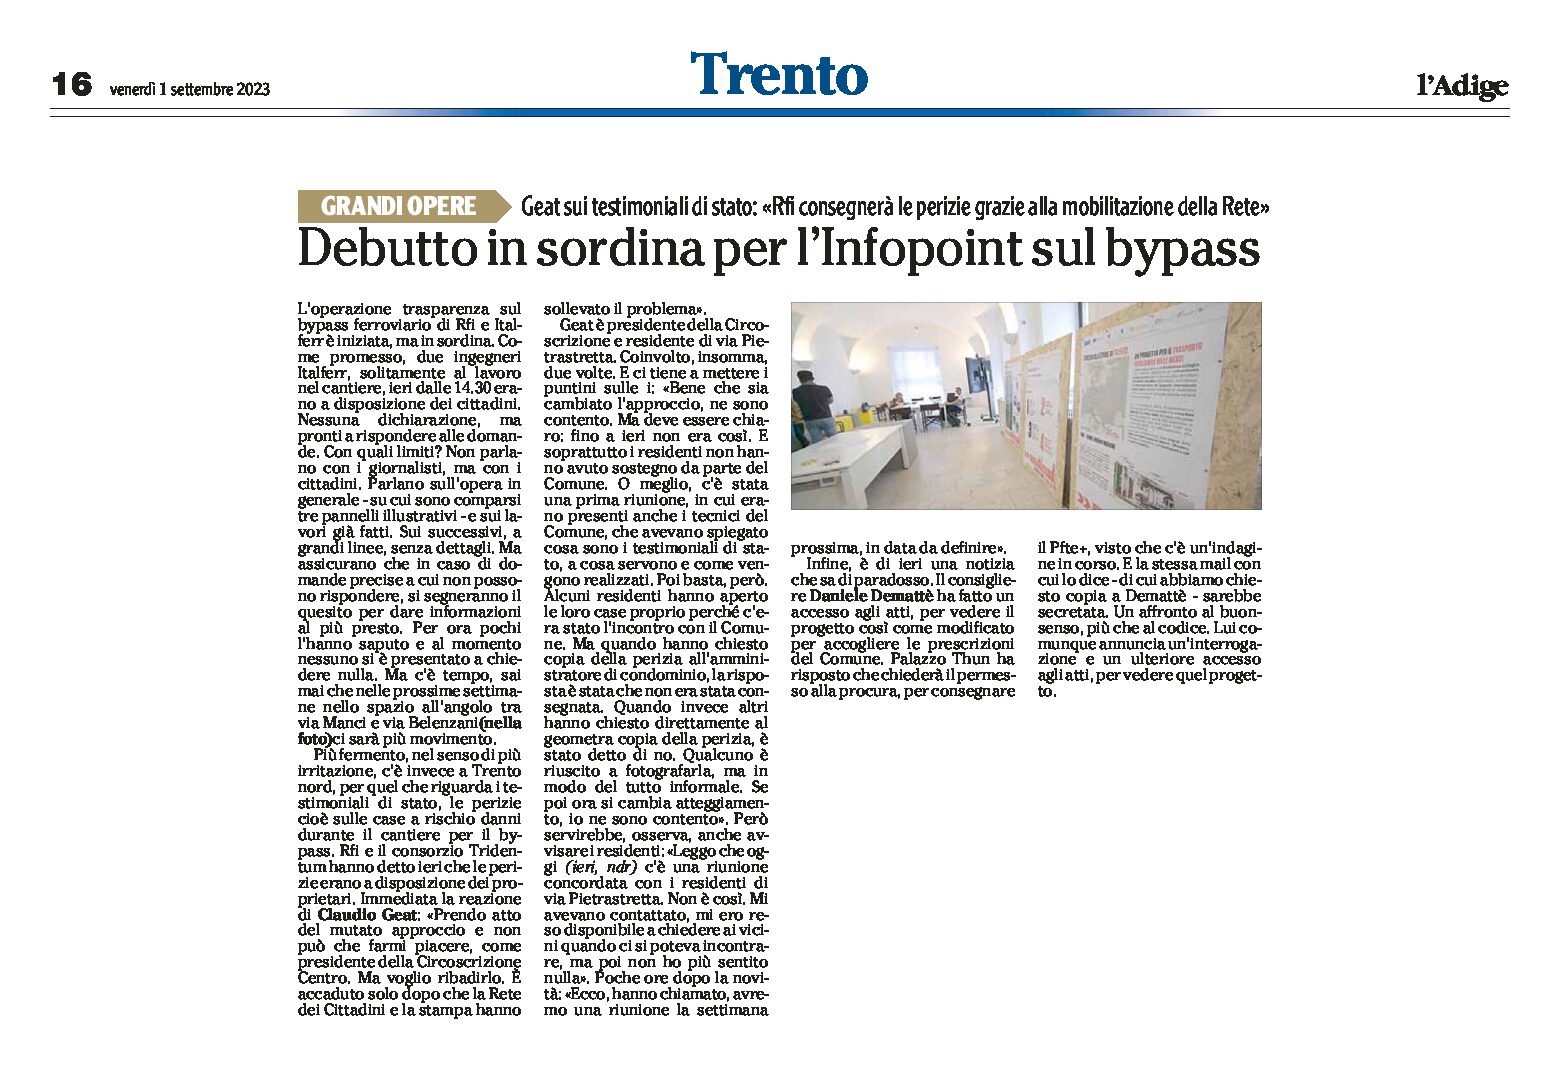 Trento, bypass ferroviario: Infopoint, debutto in sordina